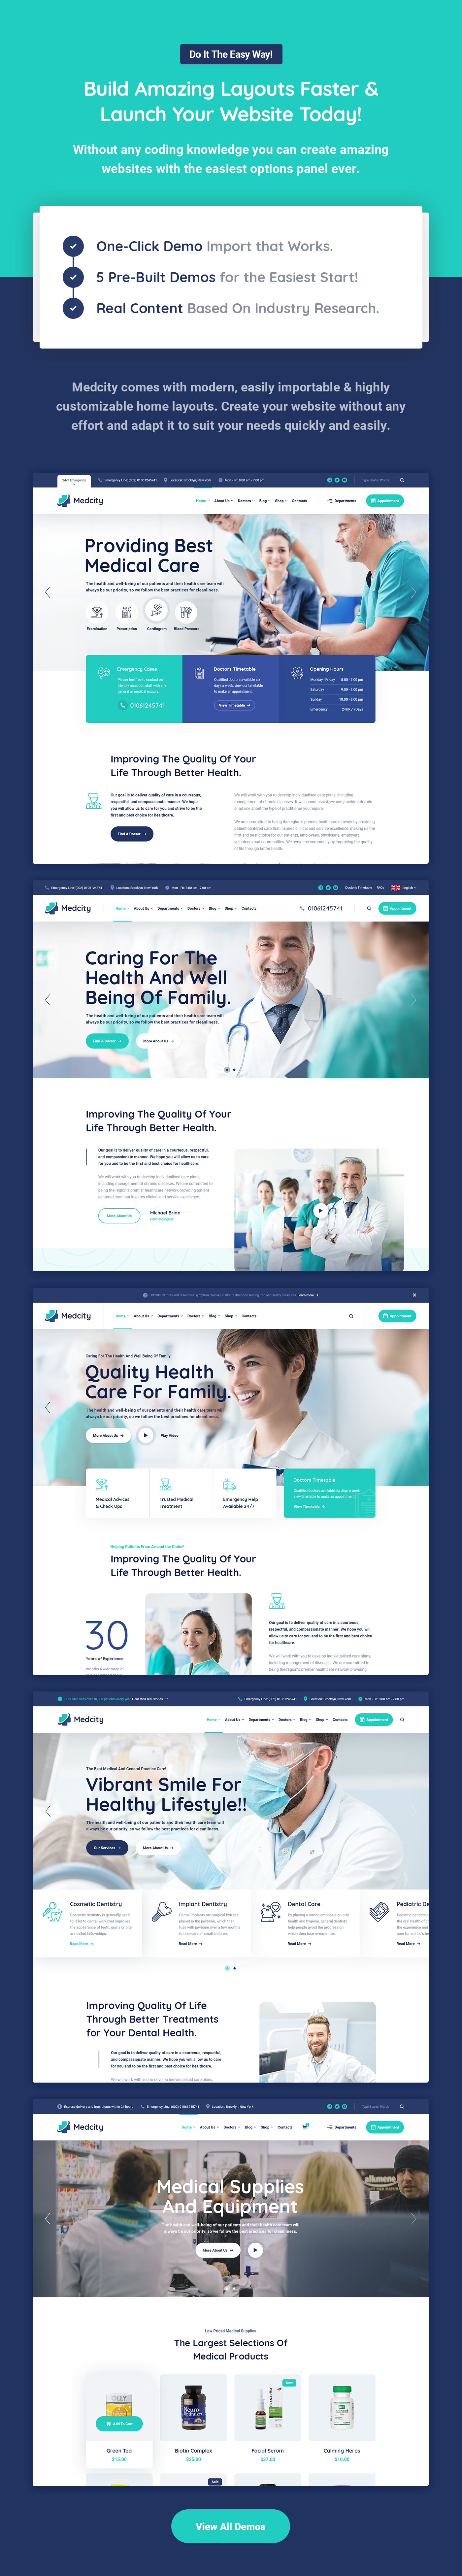 Medcity - Health & Medical WordPress Theme - 5